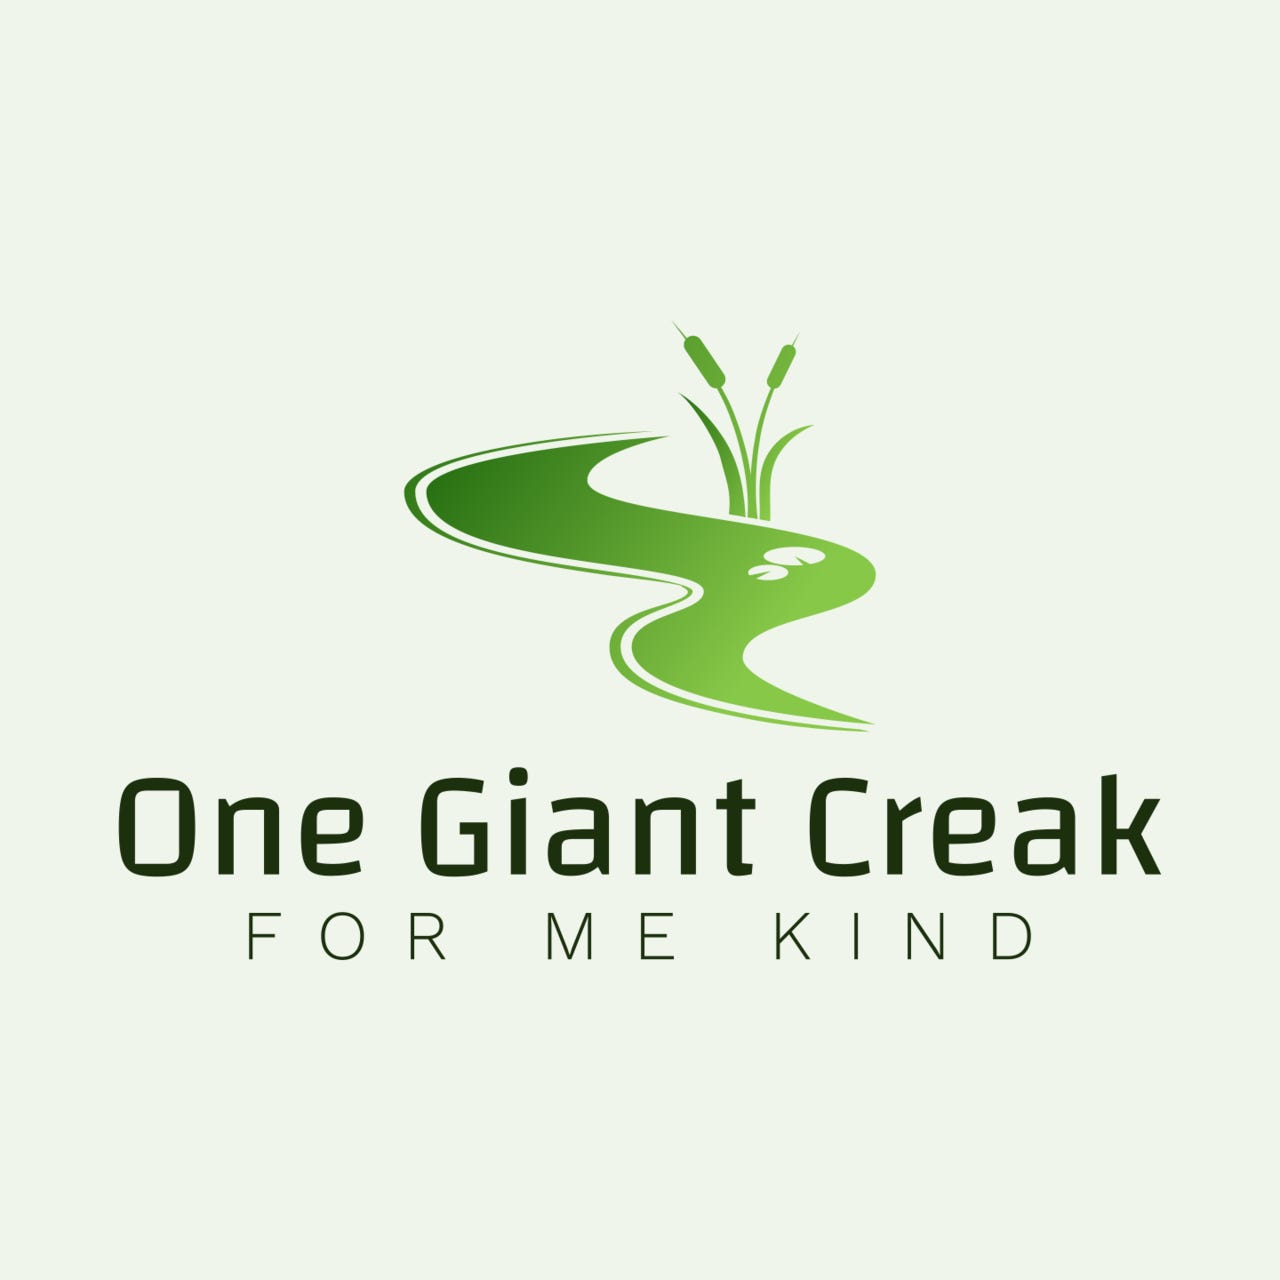 One Giant Creak for Me-Kind!